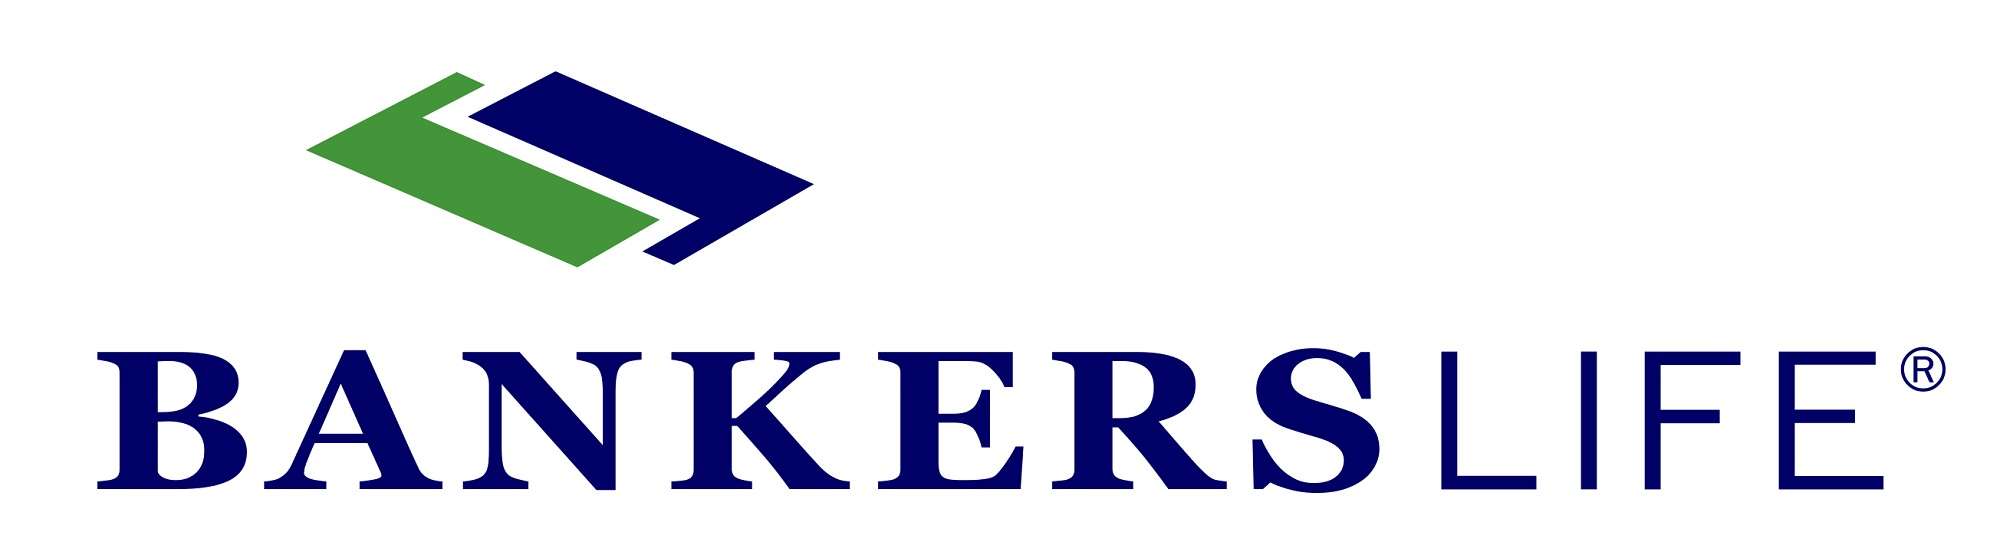 Bankers Life Advisory Services, Inc. Logo